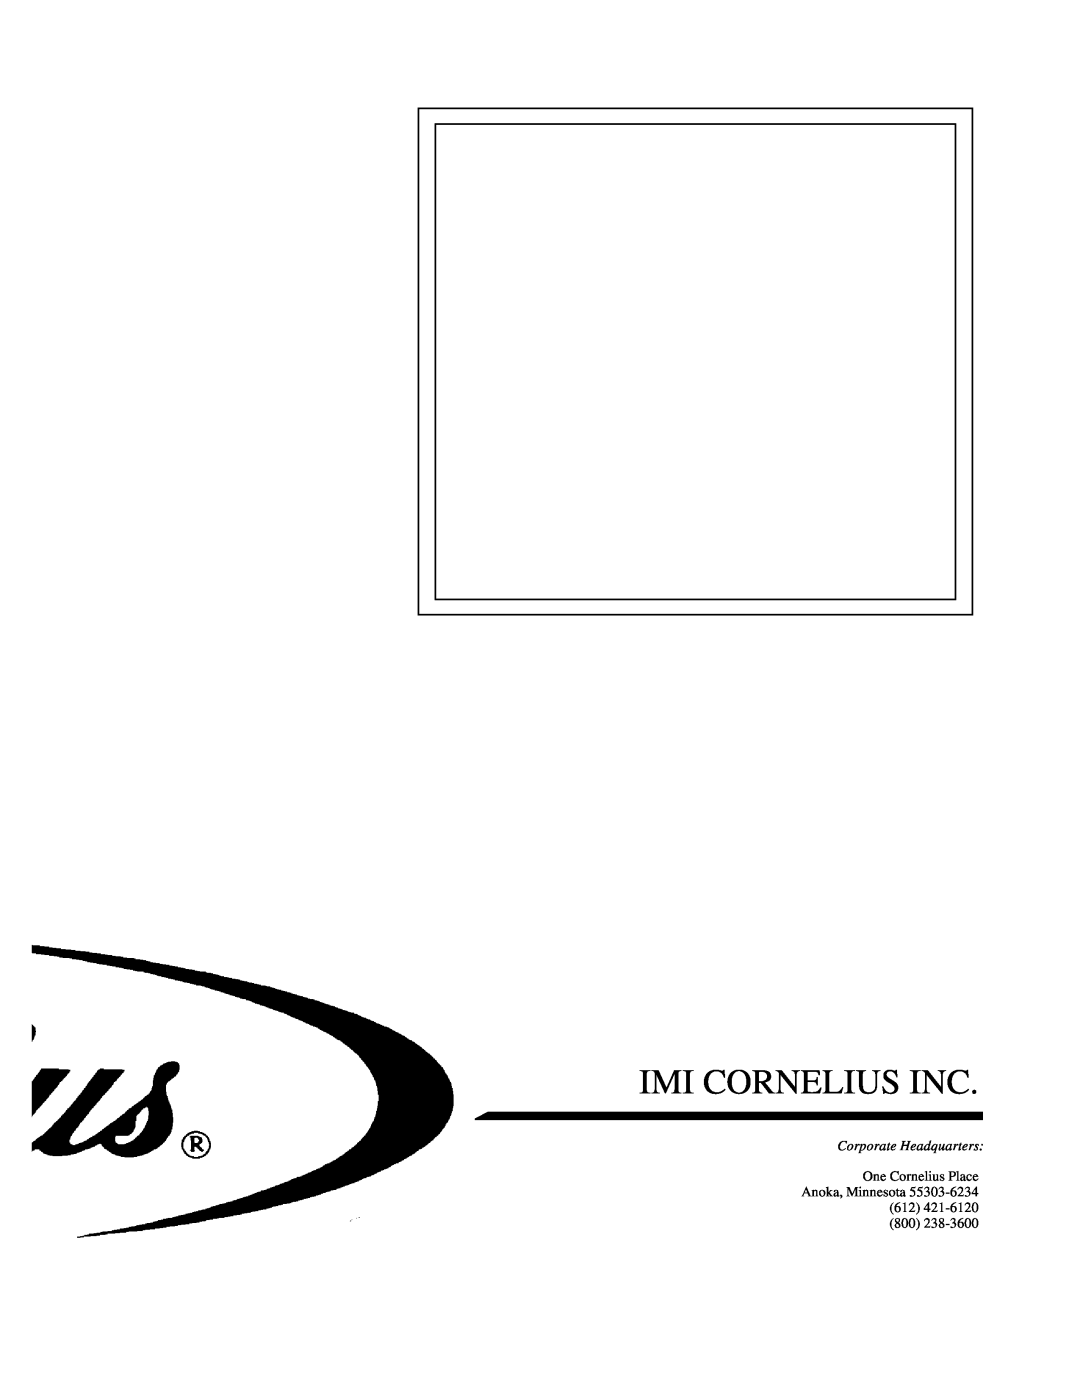 Cornelius D3030 manual Imi Cornelius Inc, Corporate Headquarters, One Cornelius Place Anoka, Minnesota 612 